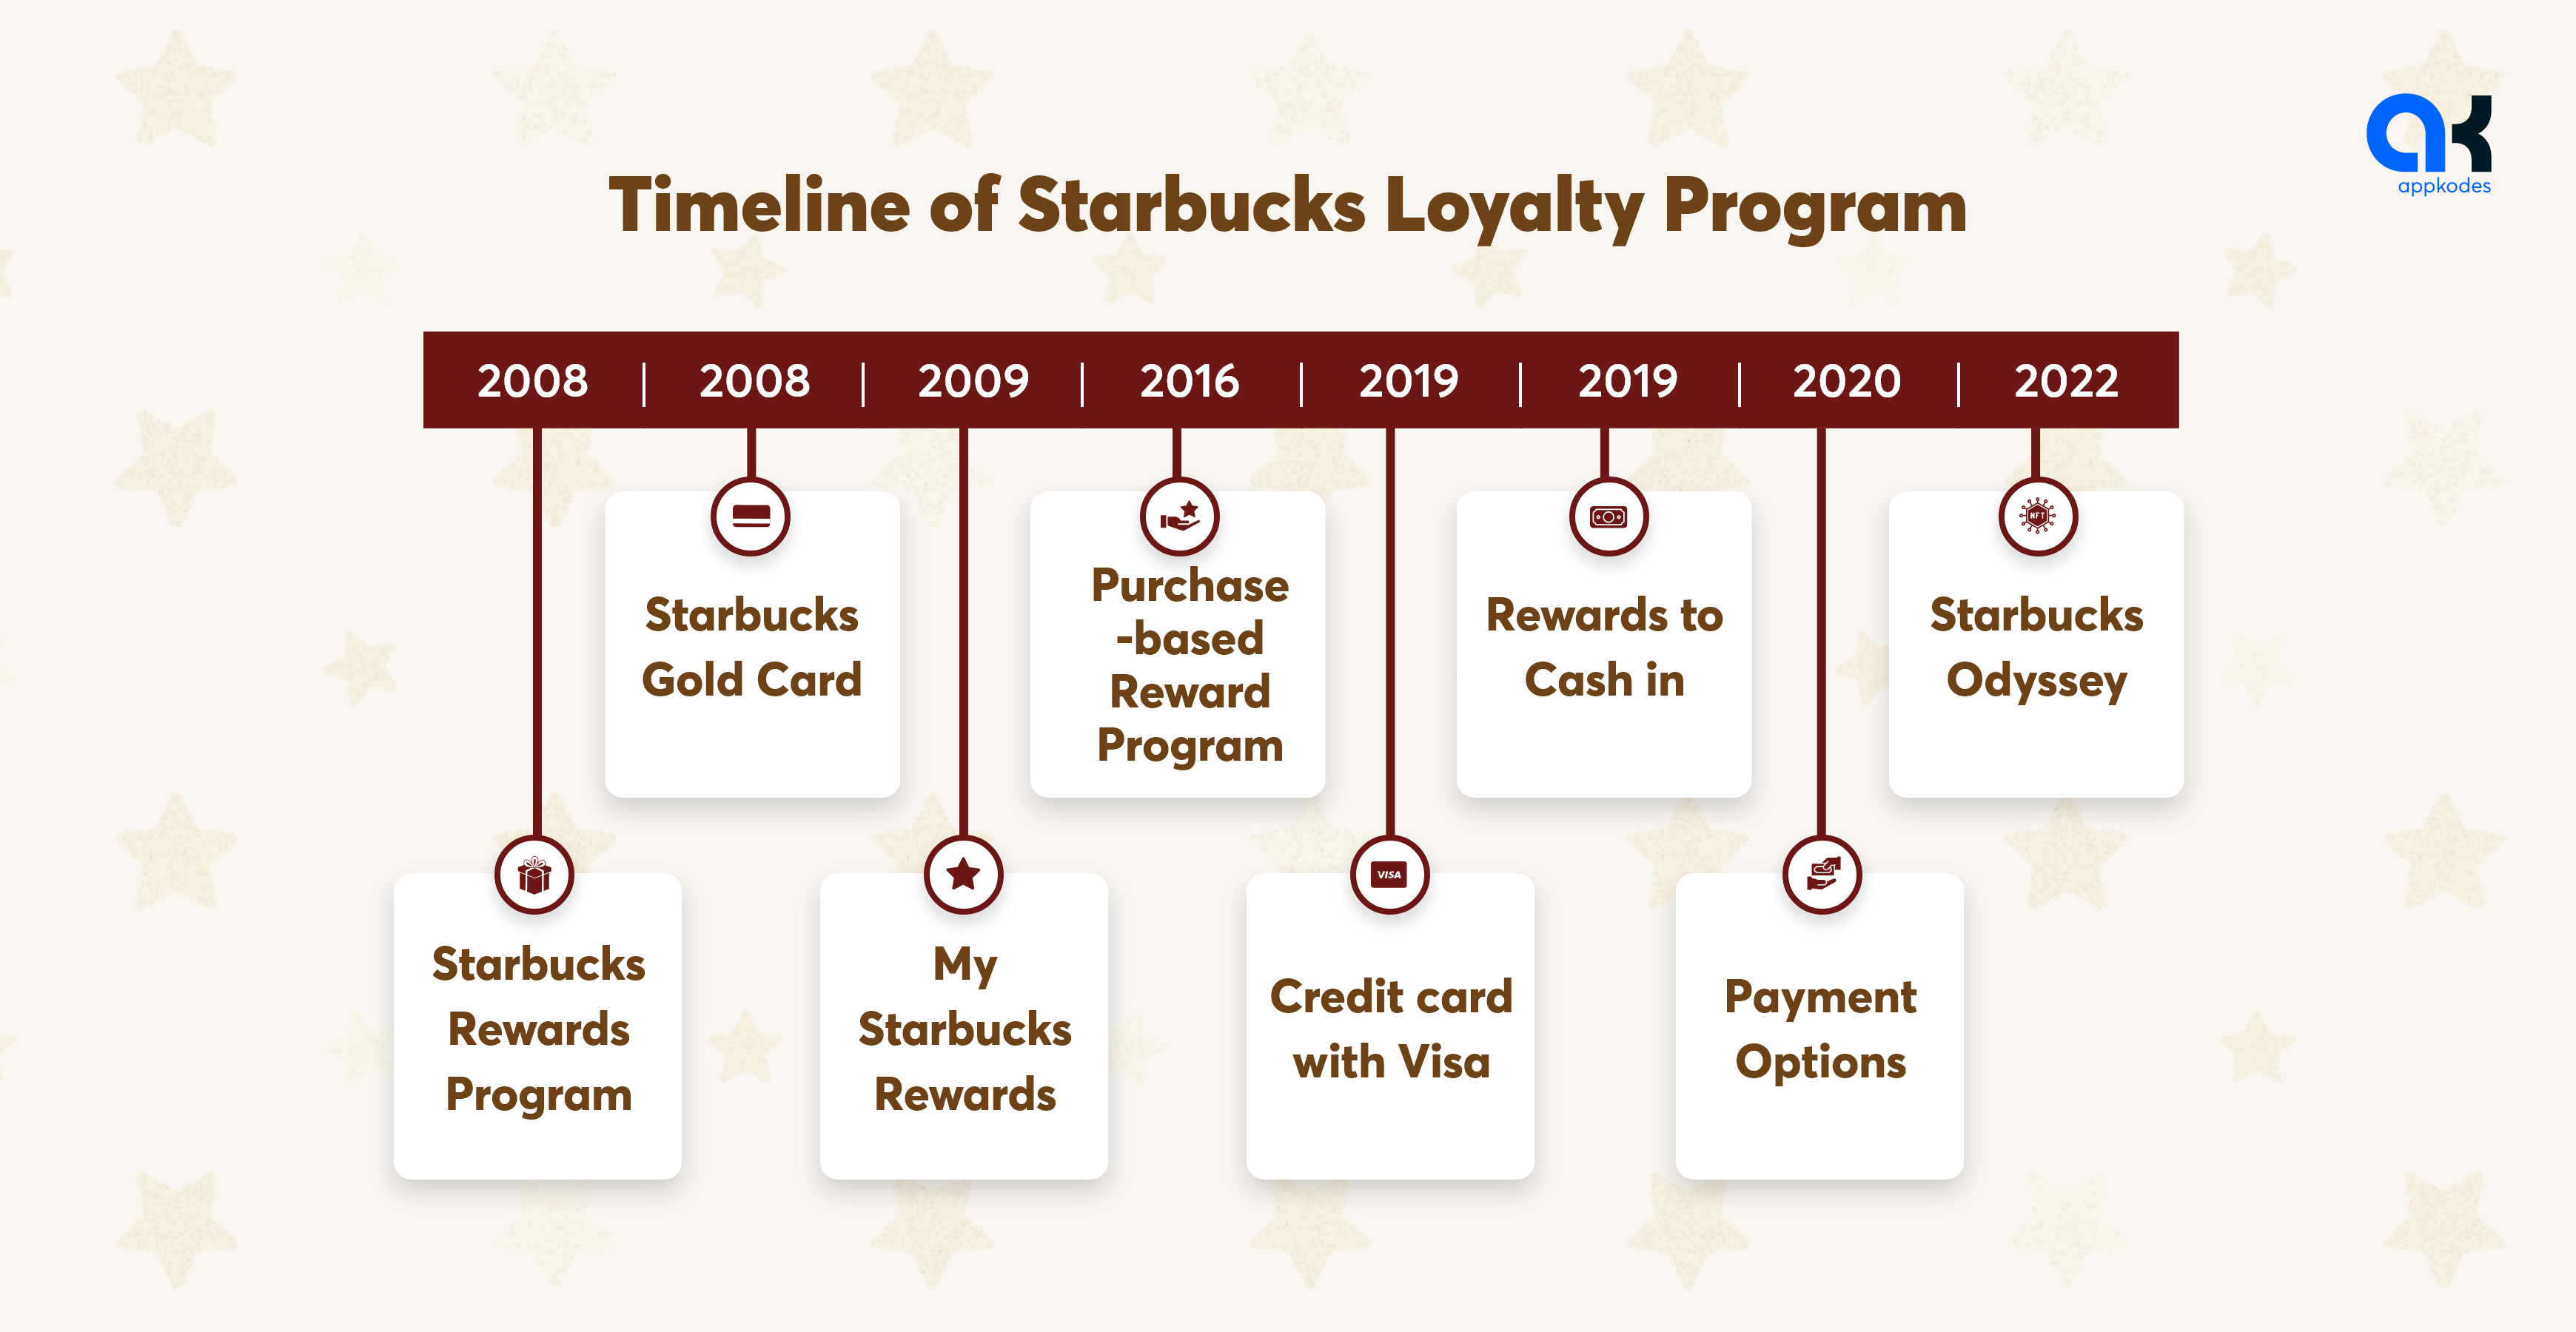 Timeline of Starbucks Loyalty Program